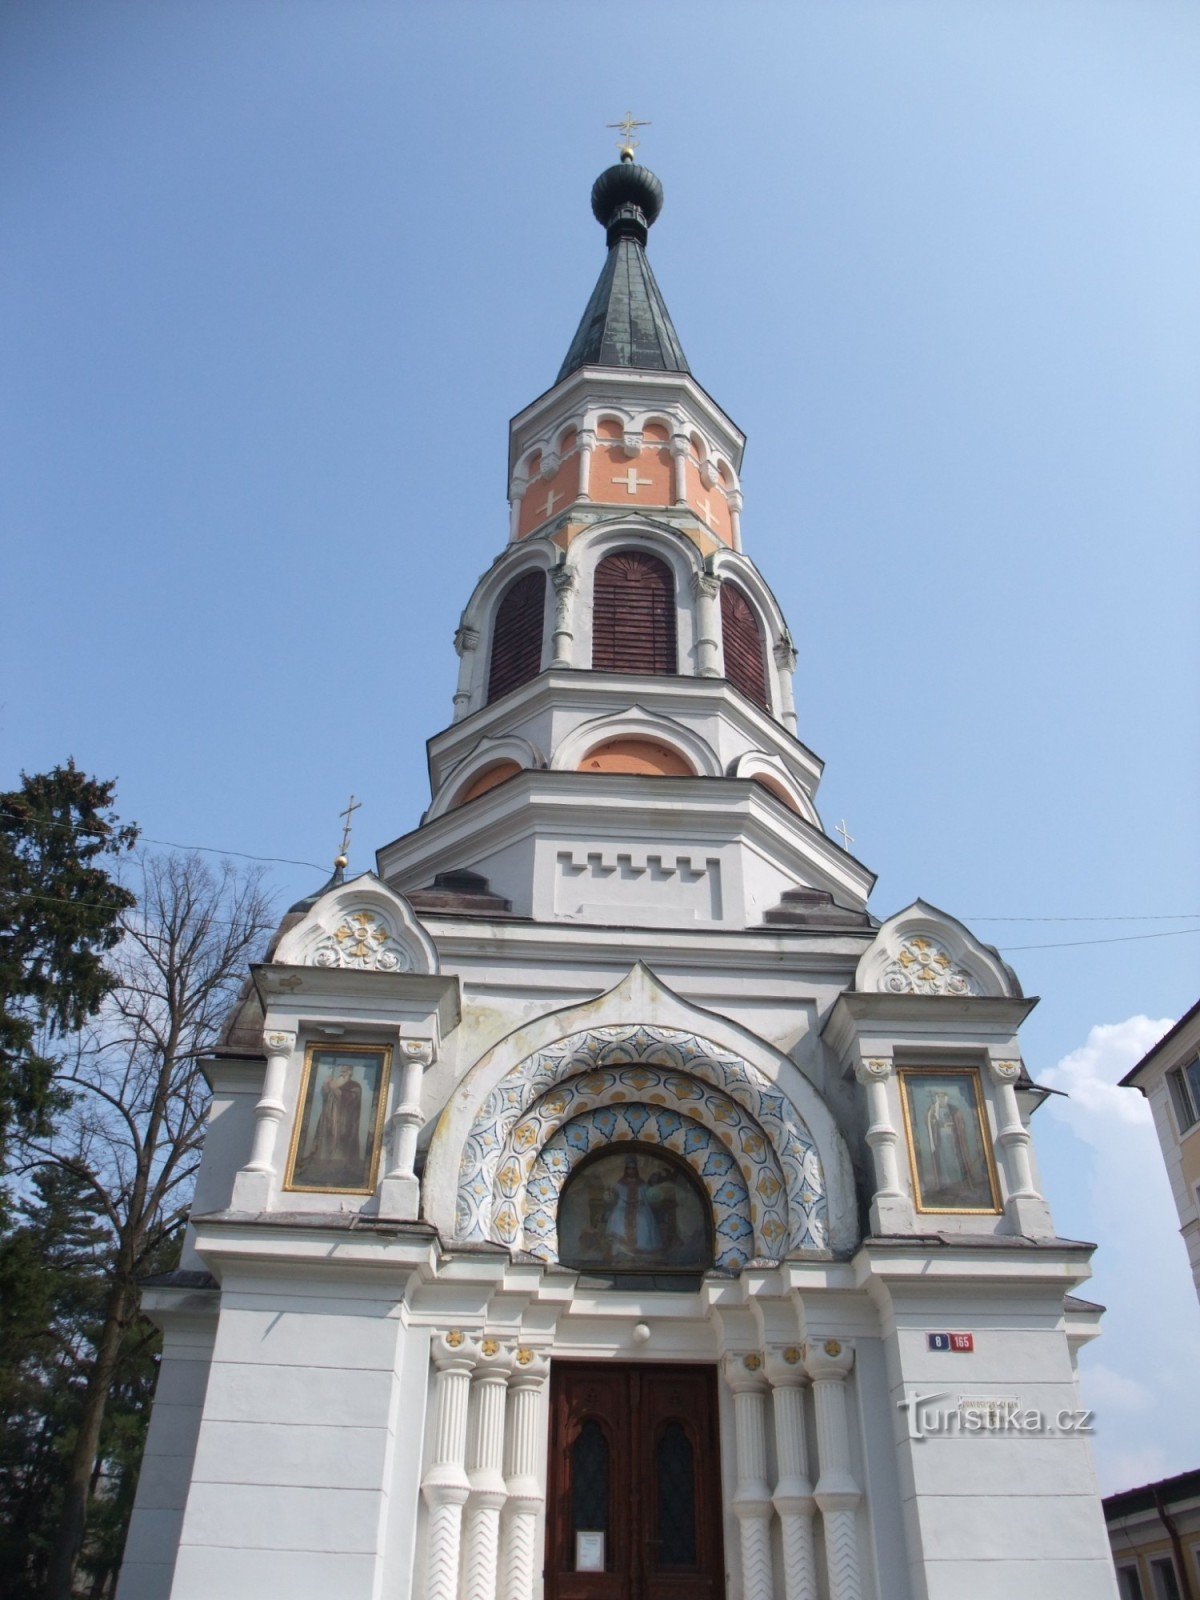 St. Olga's orthodoxe kerk in Františkovy Lázně